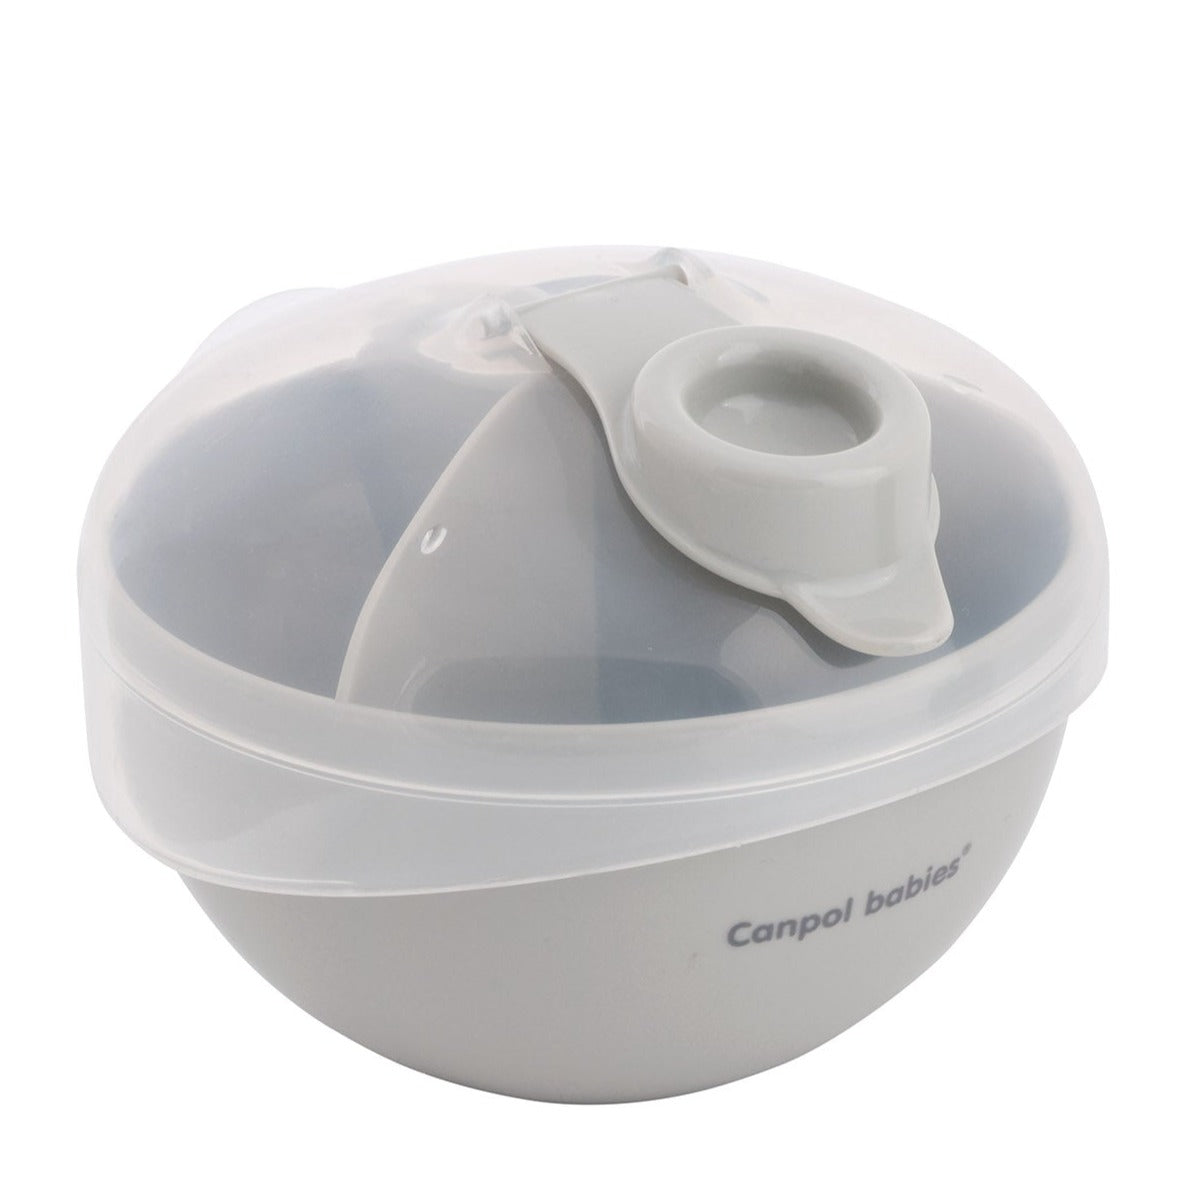 Canpol Babies: Gray Milk Powder Dispenser powder milk container